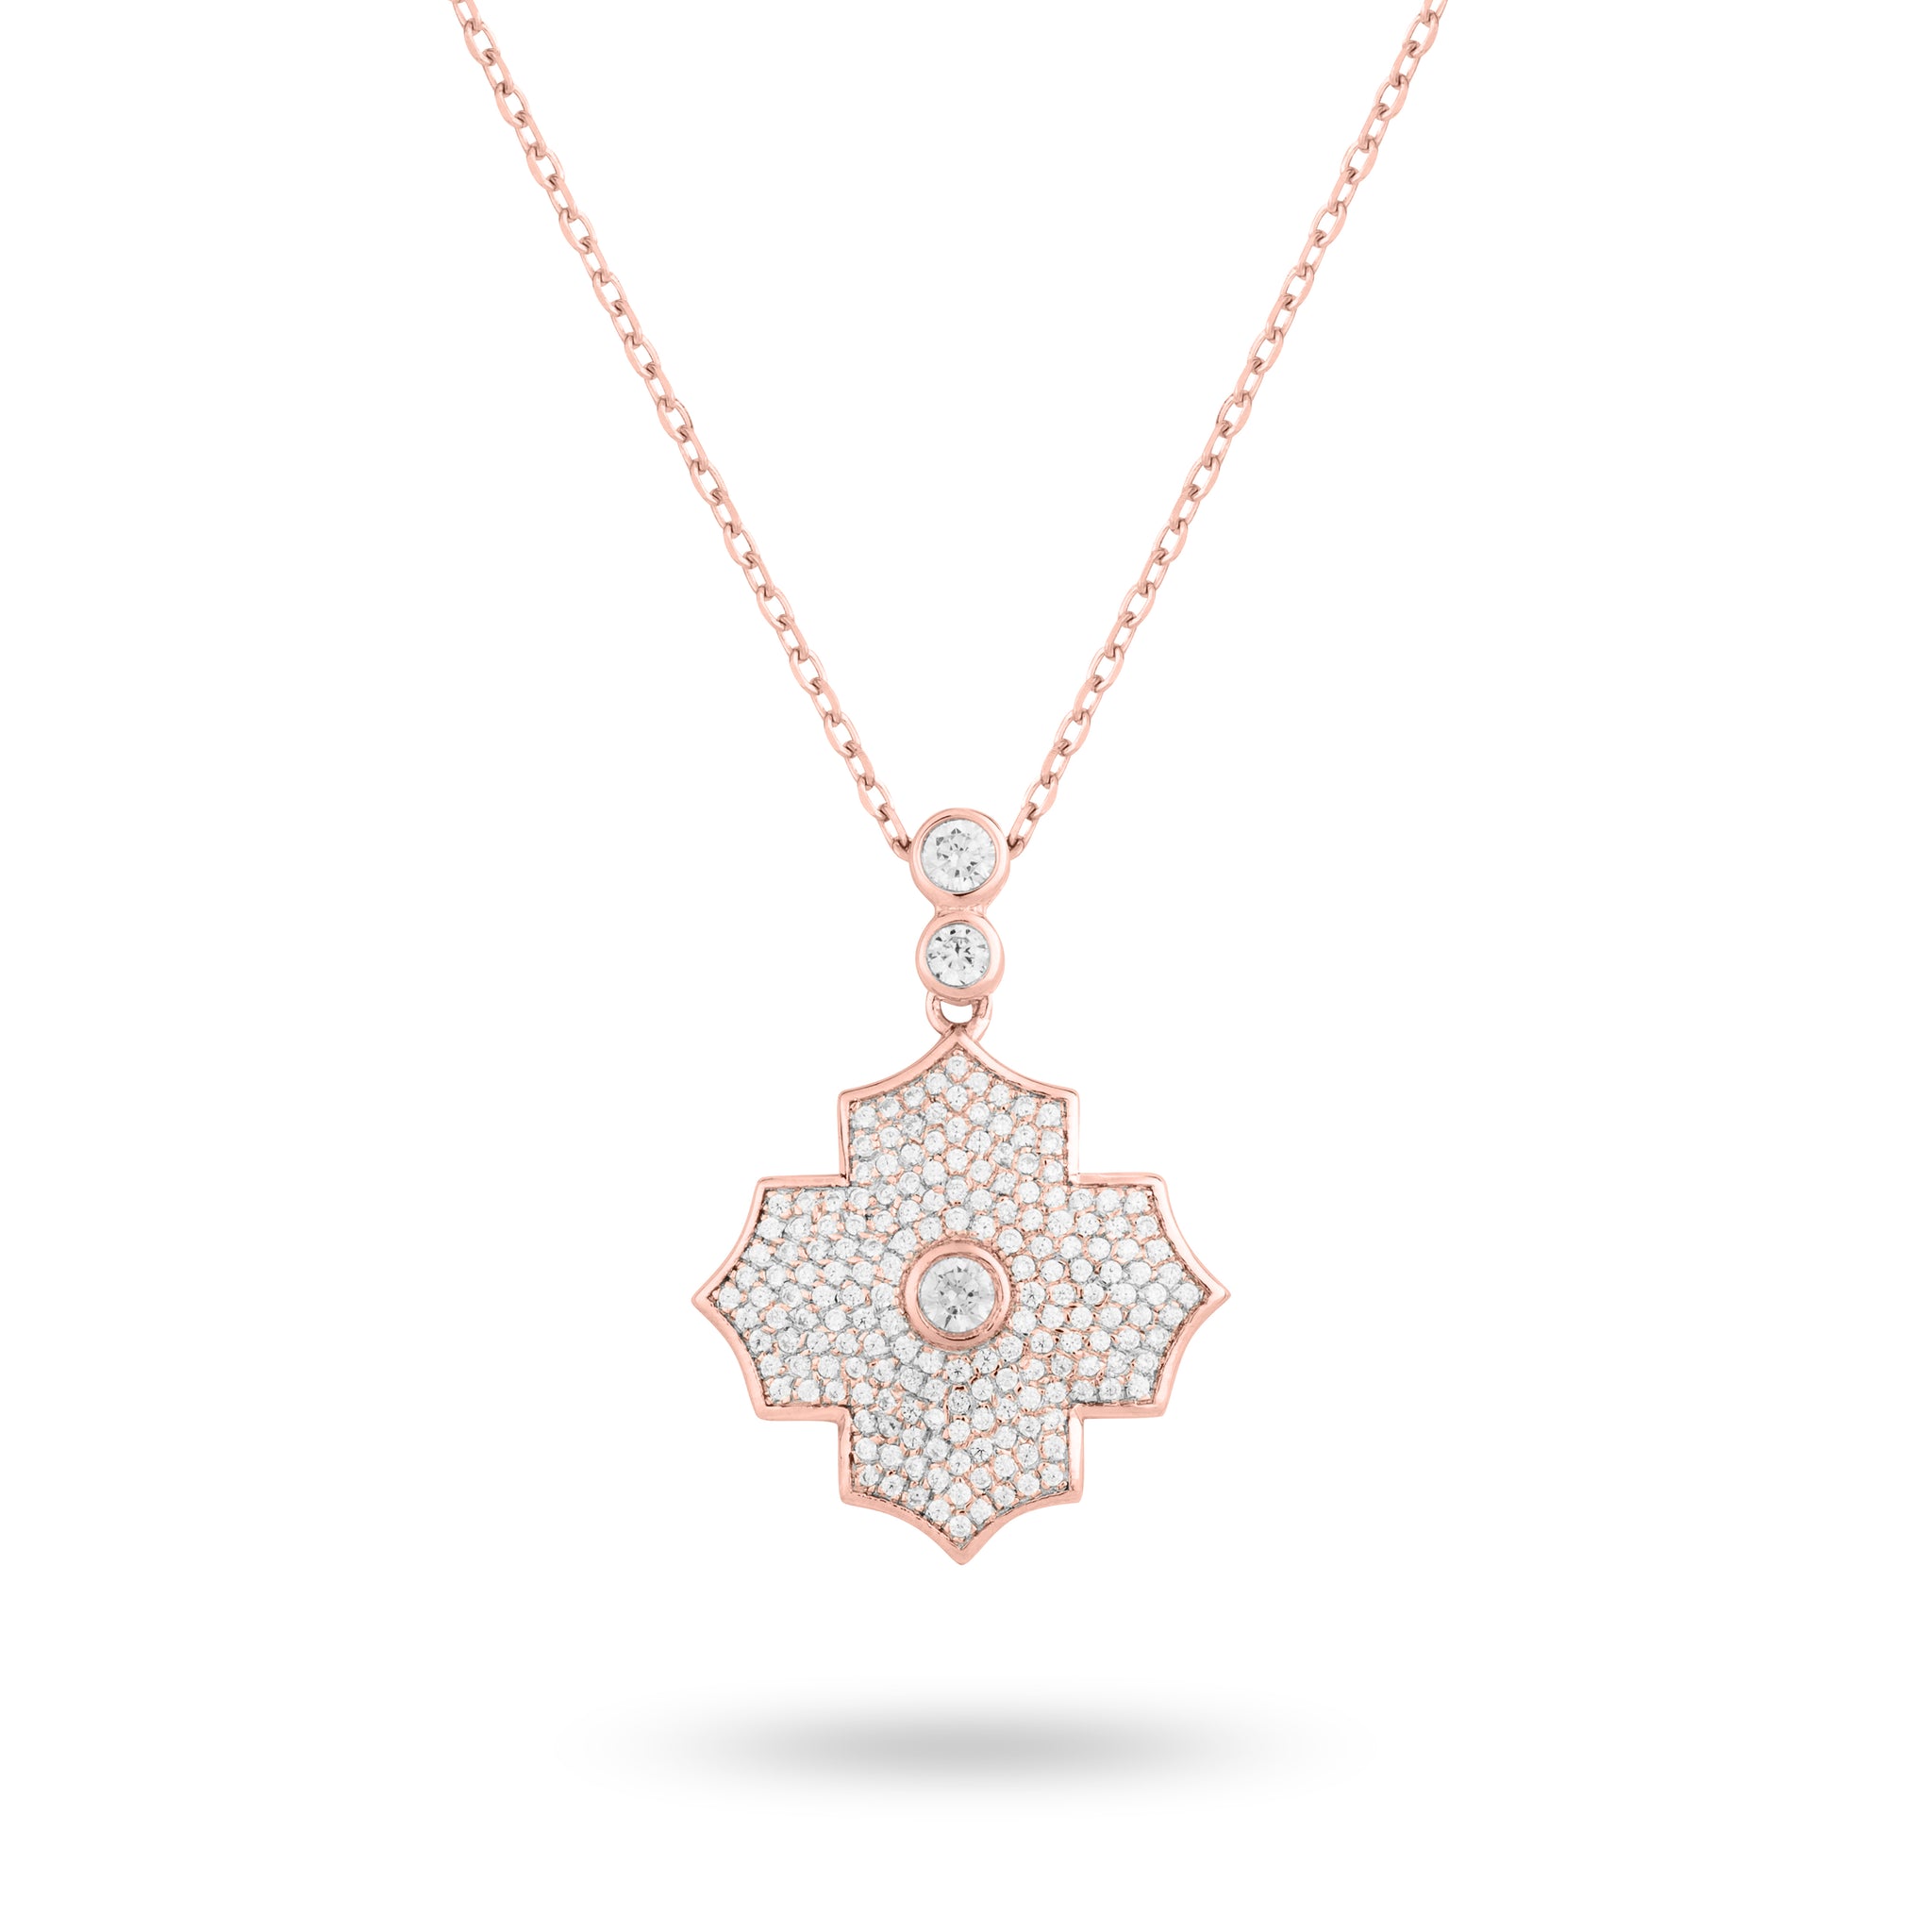 Regal Amulet- Rose Gold Pave Necklace - Ksenia Mirella Jewellery 